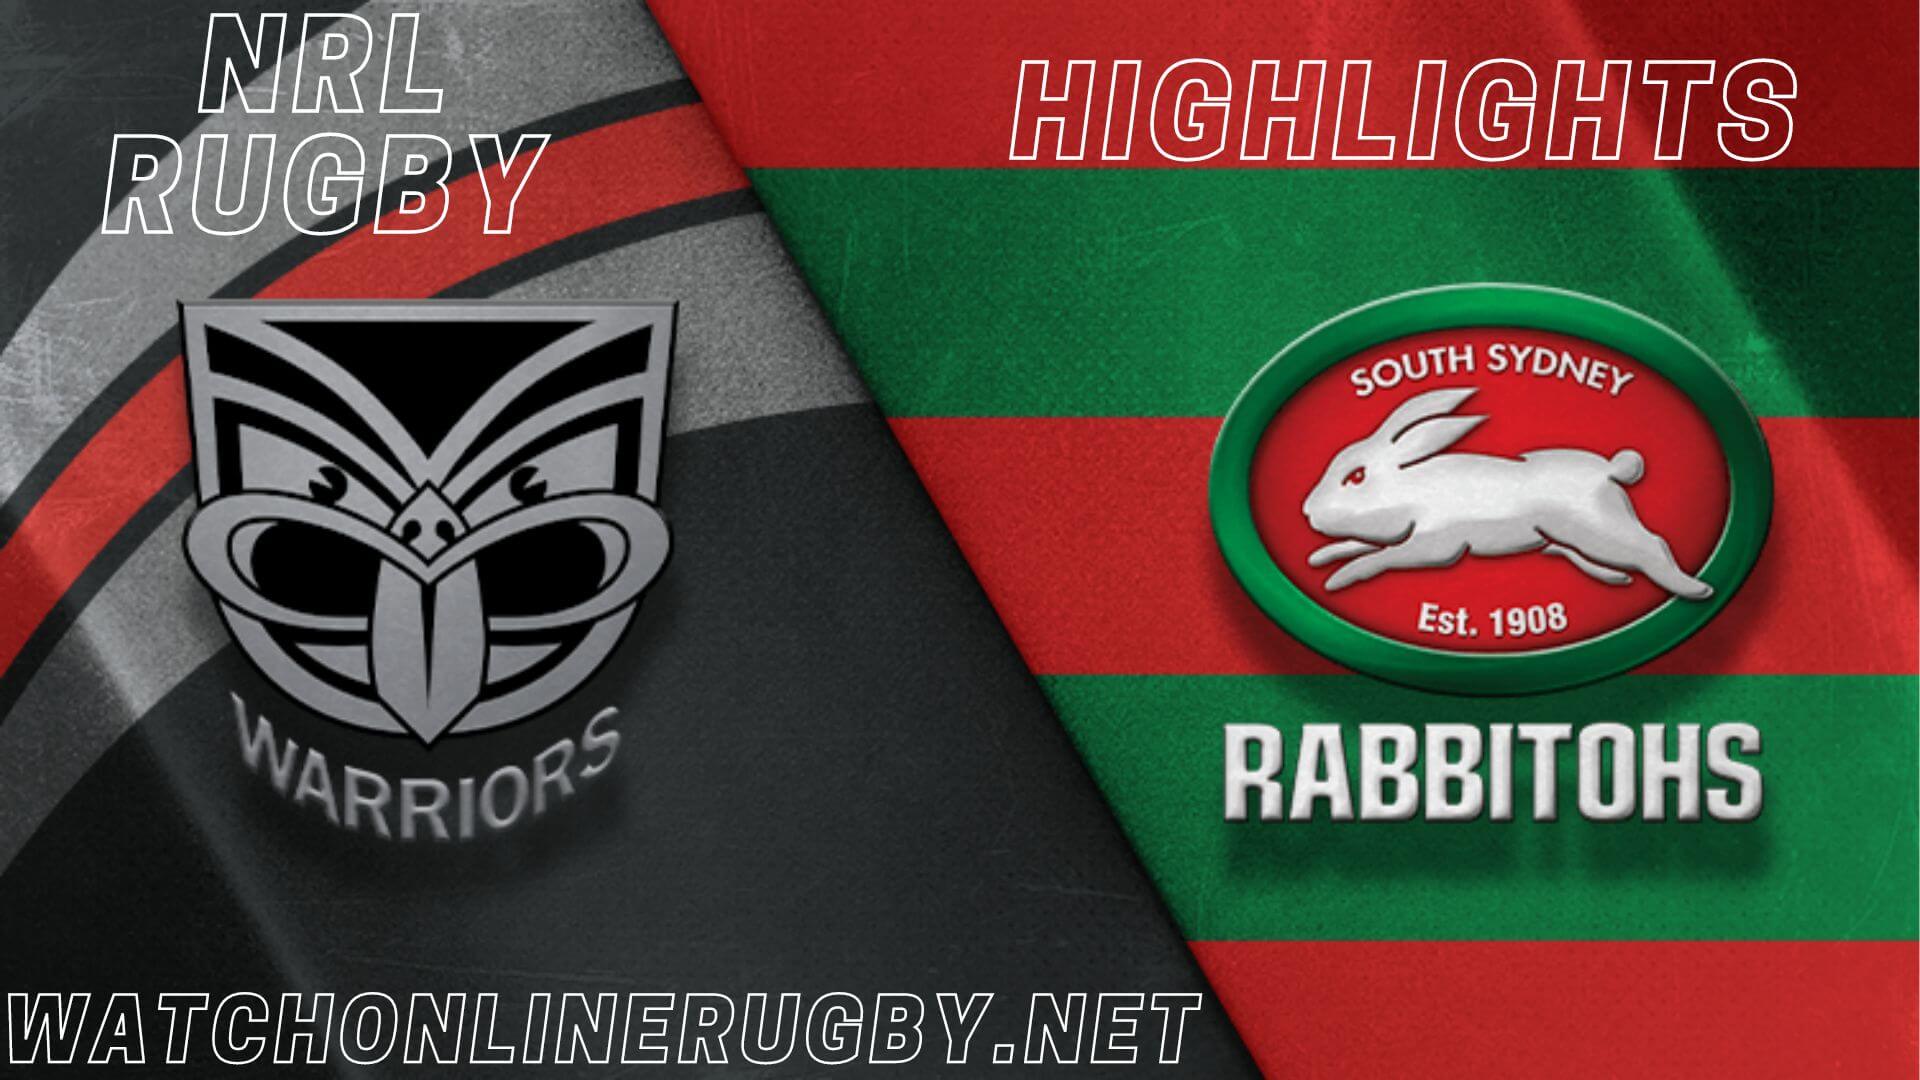 Rabbitohs Vs Warriors Highlights RD 21 NRL Rugby